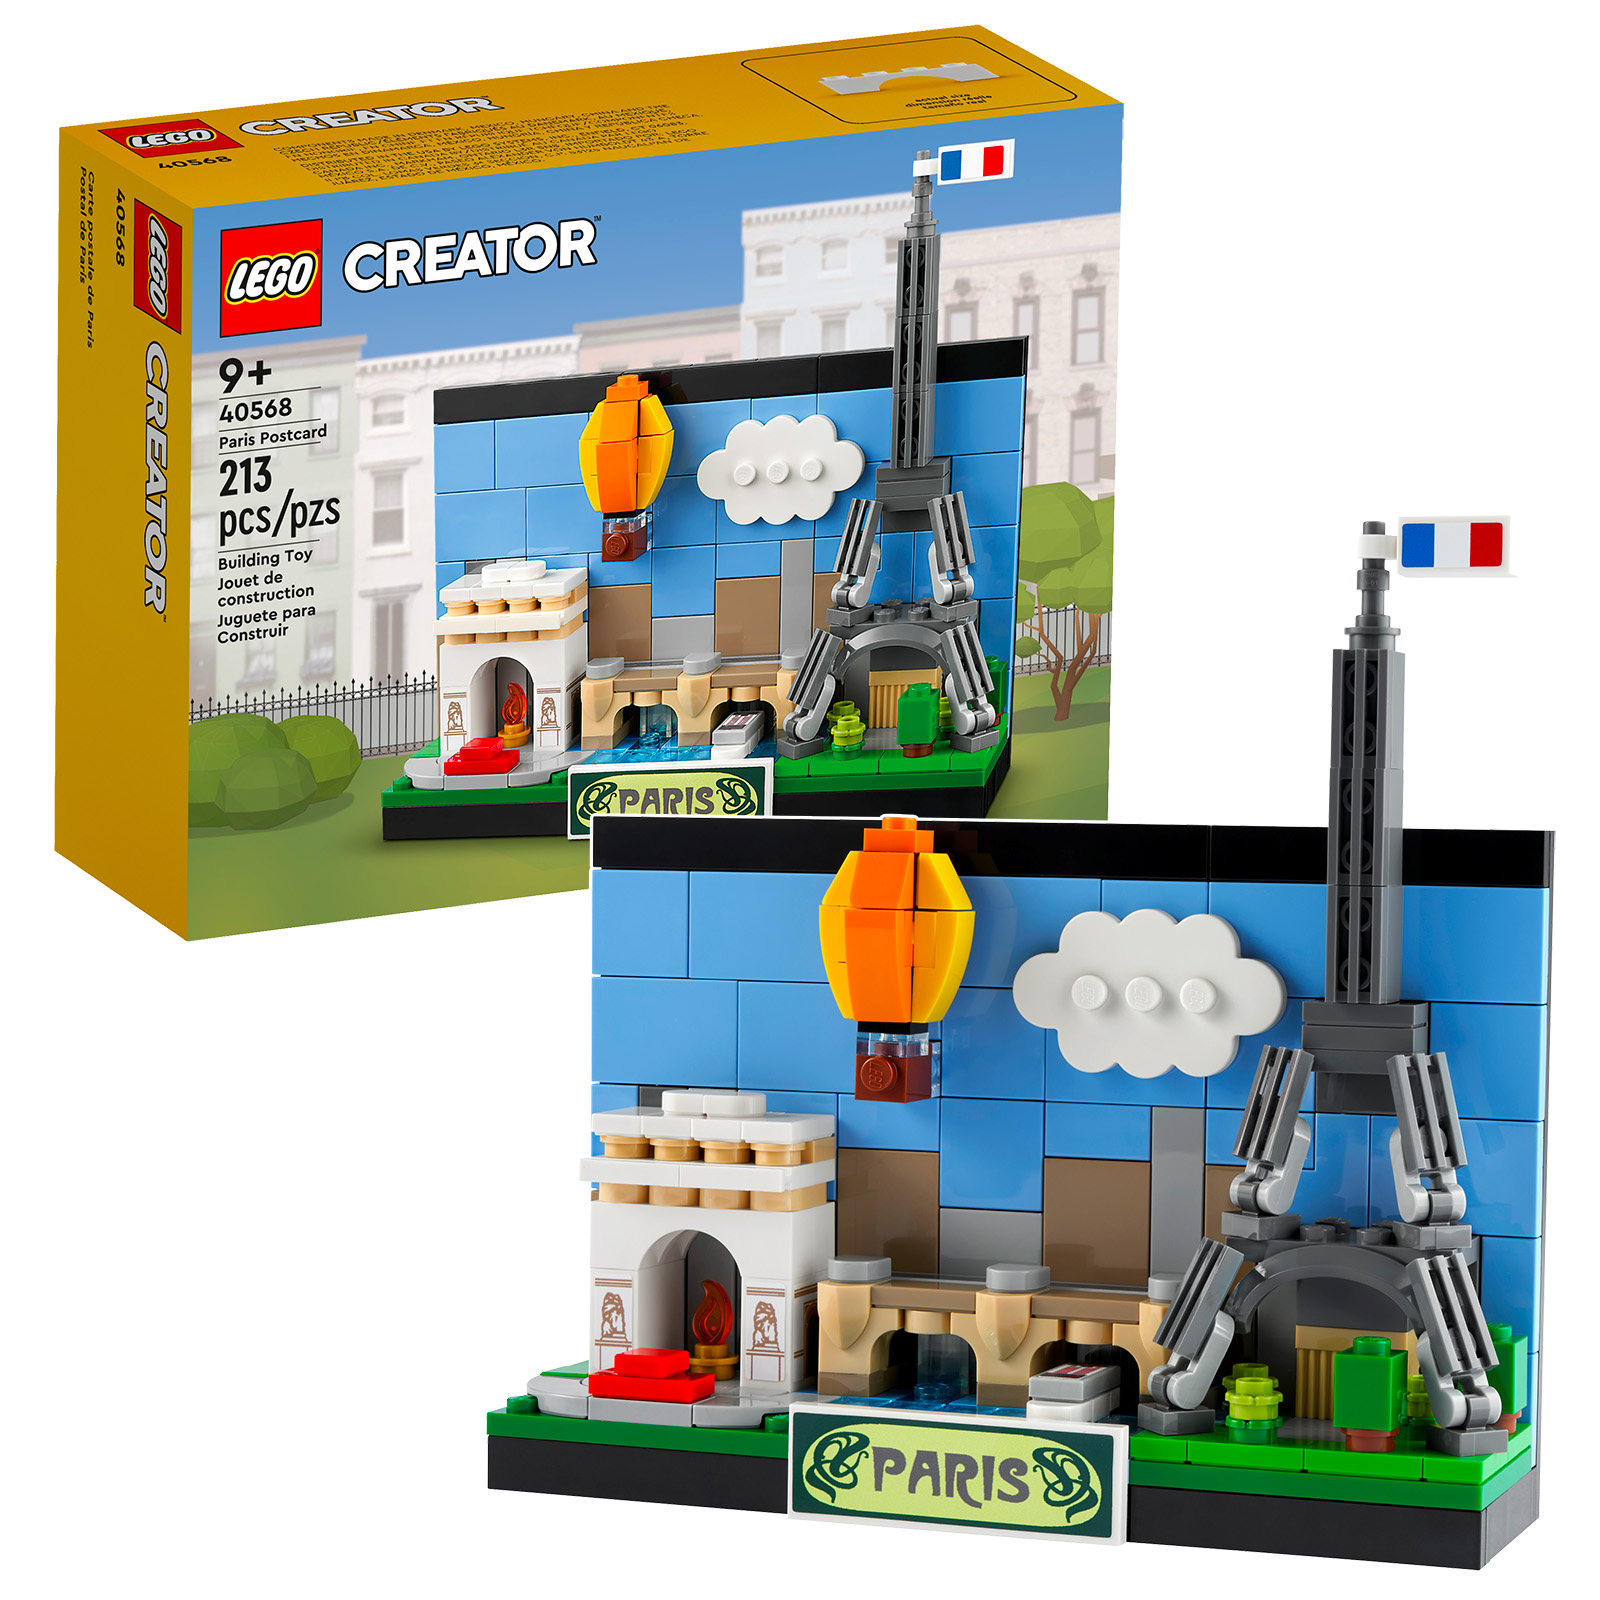 Uudet LEGO Creator 2022 -julkaisut: 40568 Paris Postcard & 40569 London Postcard